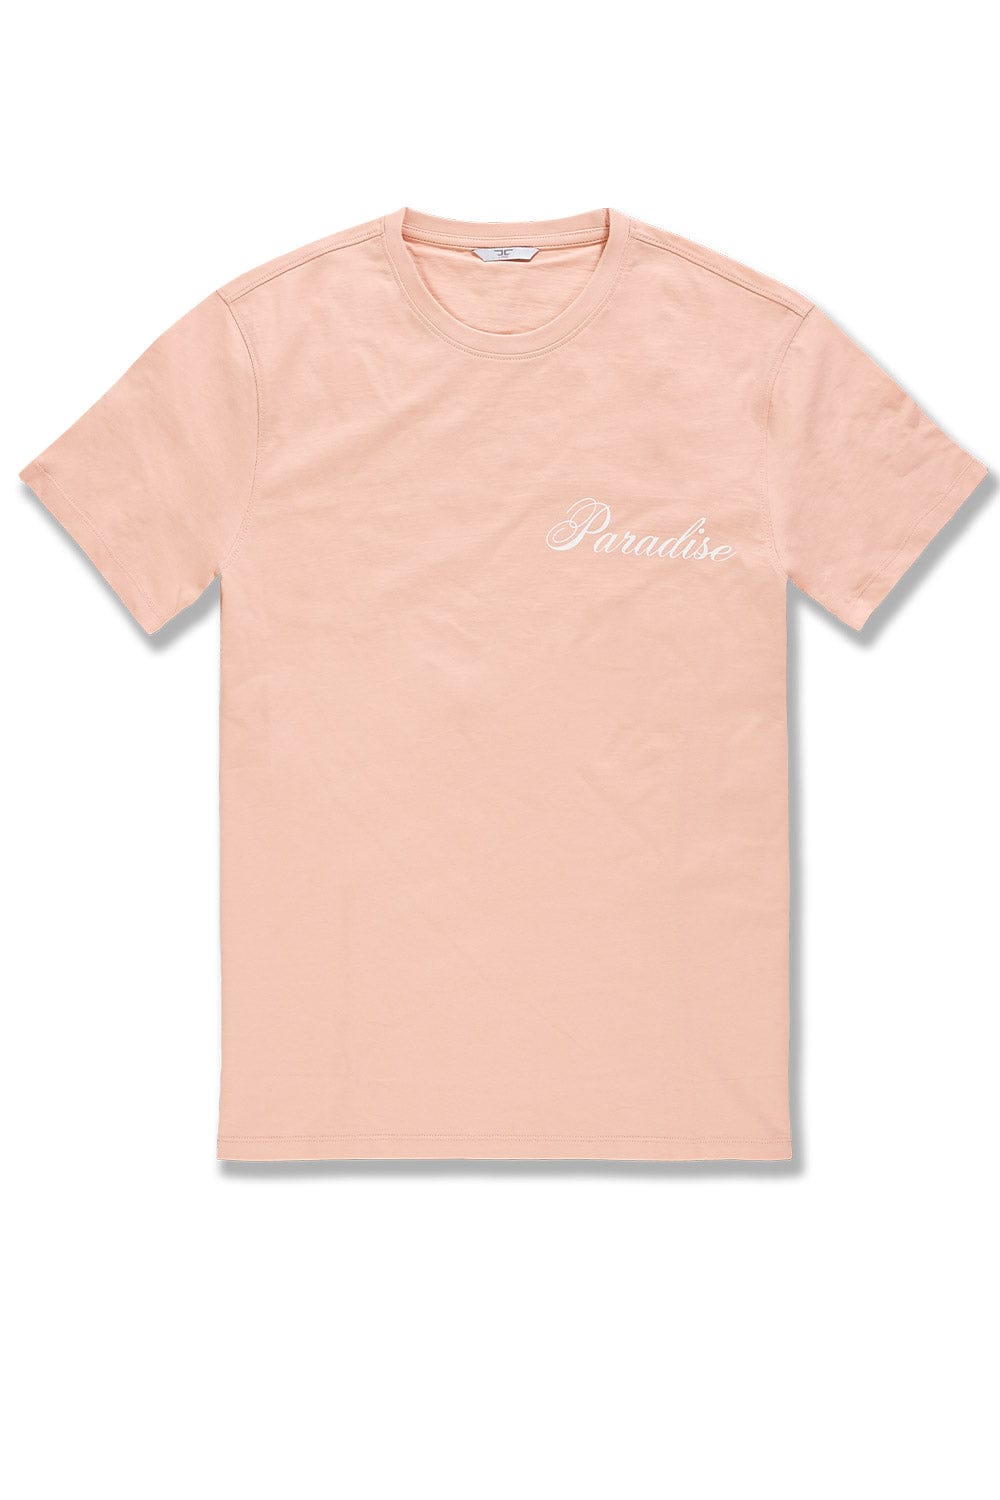 Jordan Craig Paradise T-Shirt (Pink) S / Pink